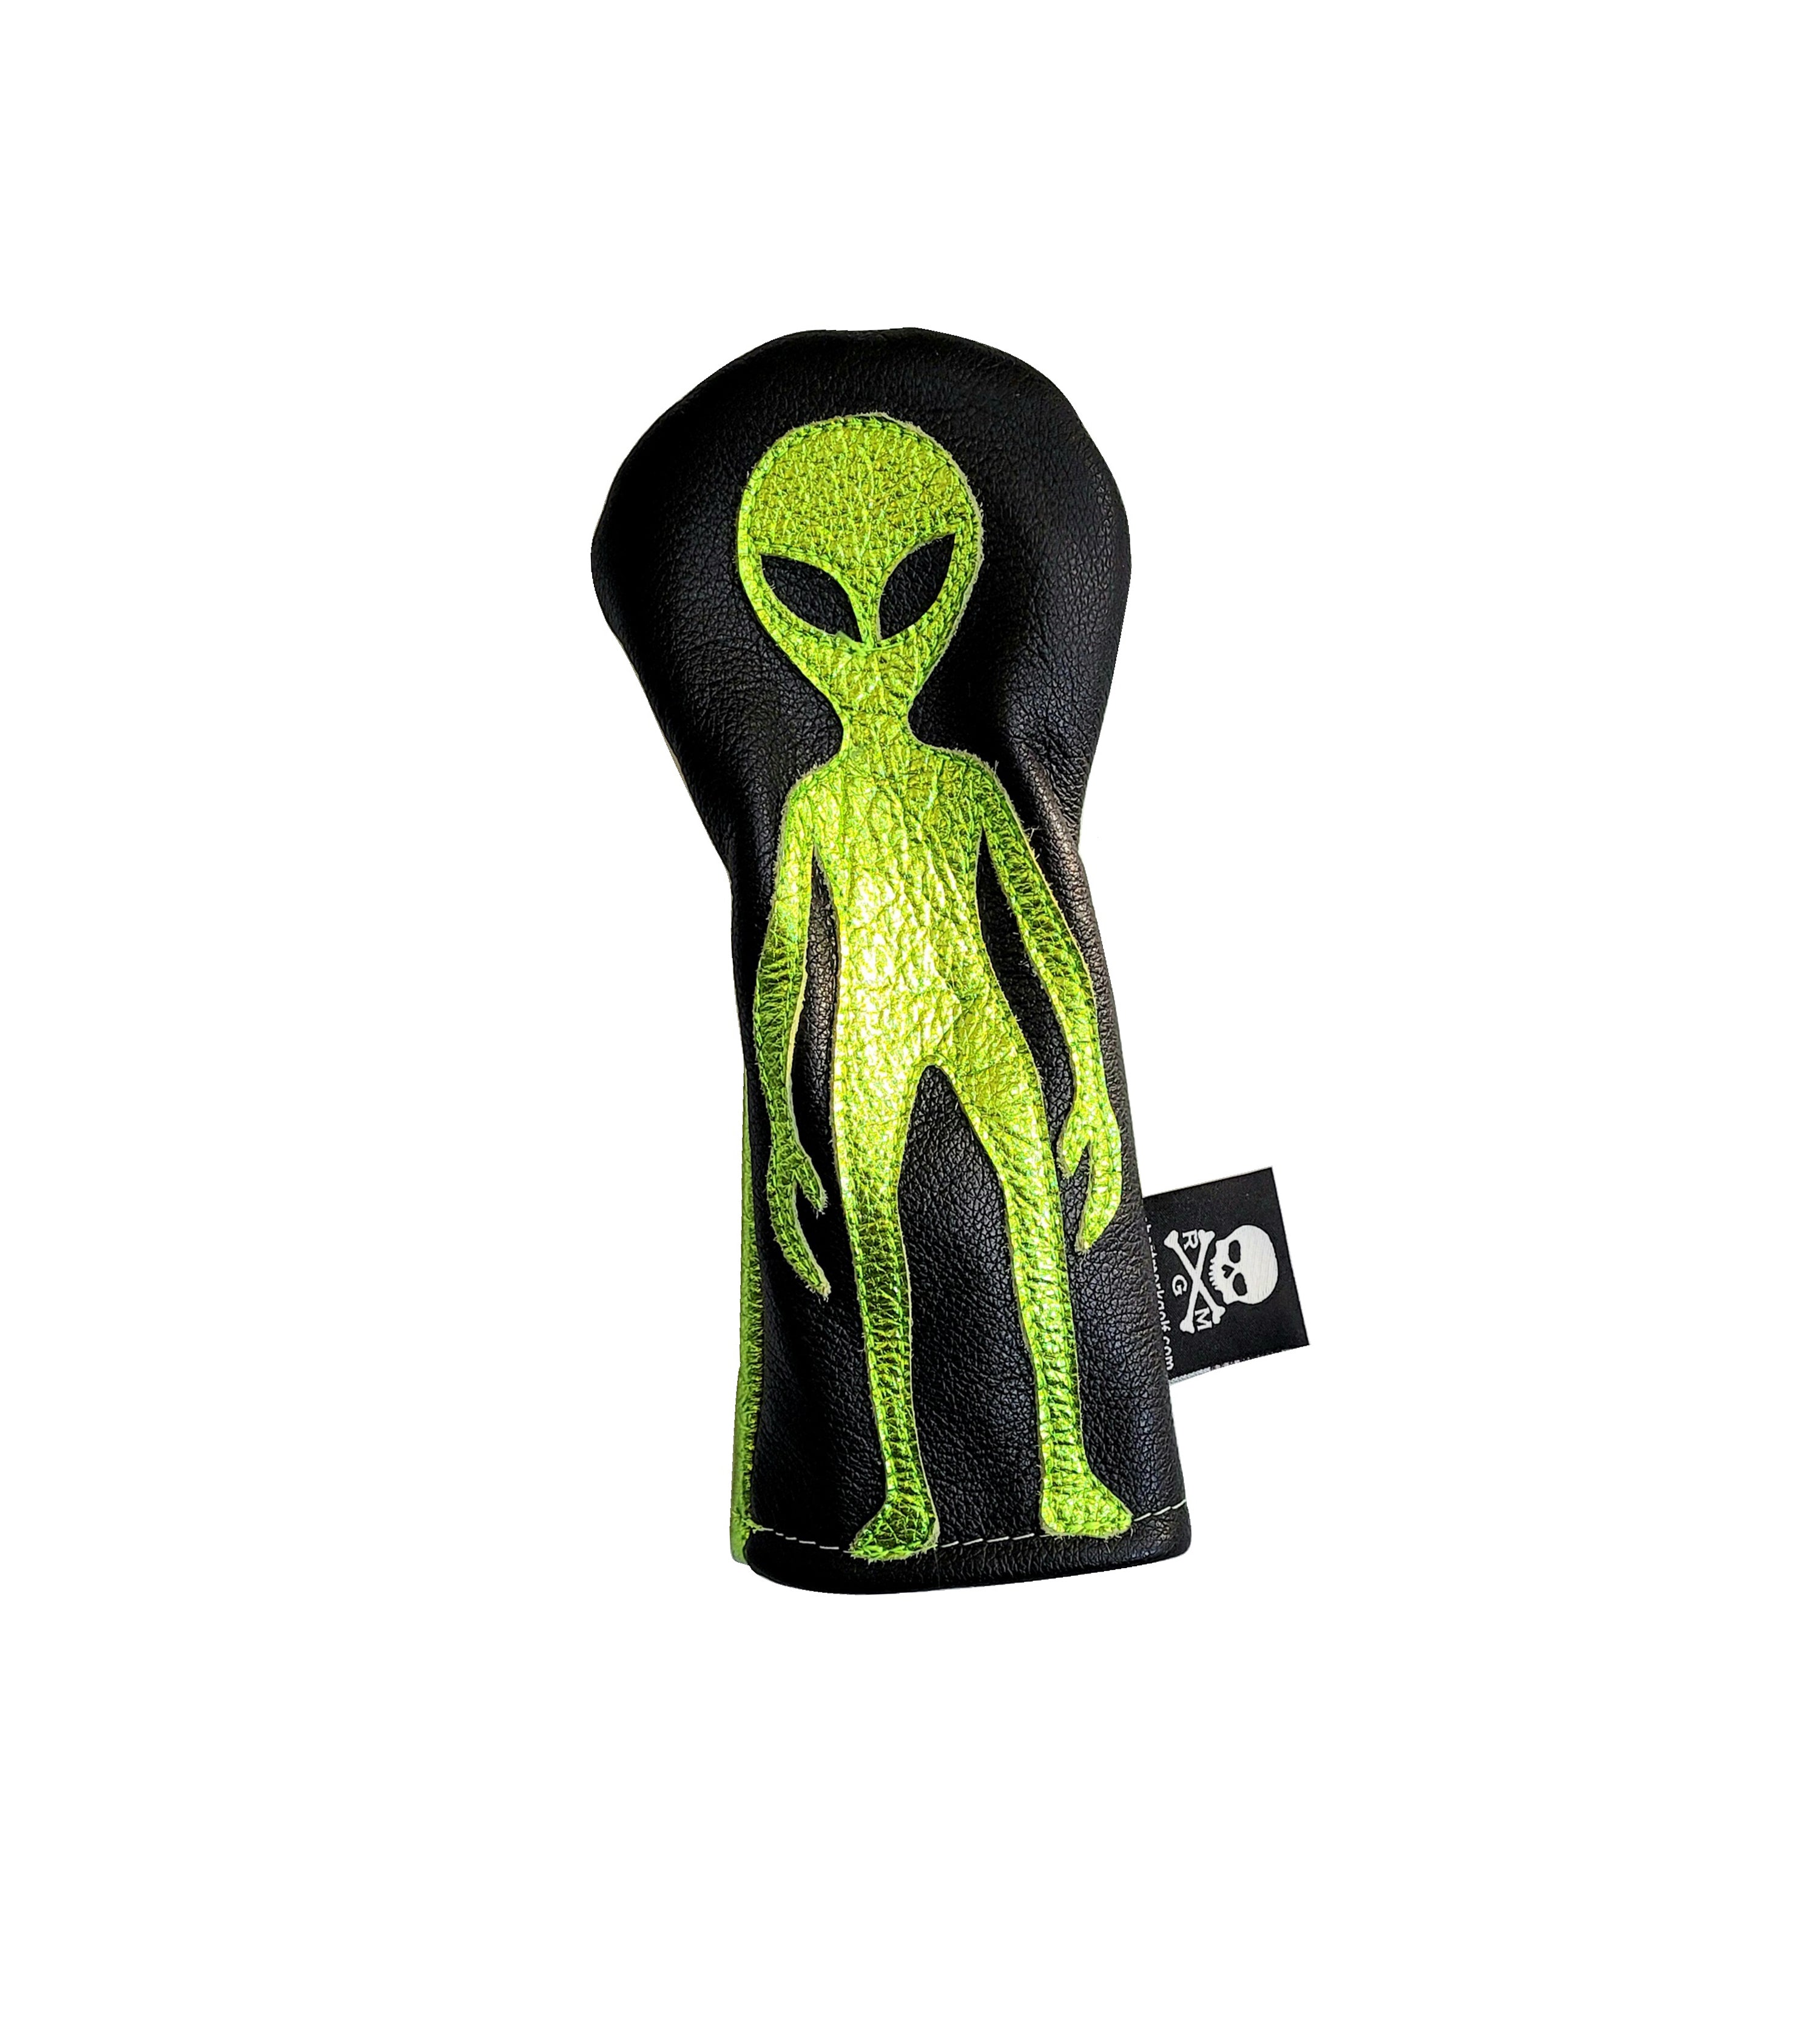 NEW! RMG LTD Edition "The Little Green Alien" Hybrid Headcover! - Robert Mark Golf